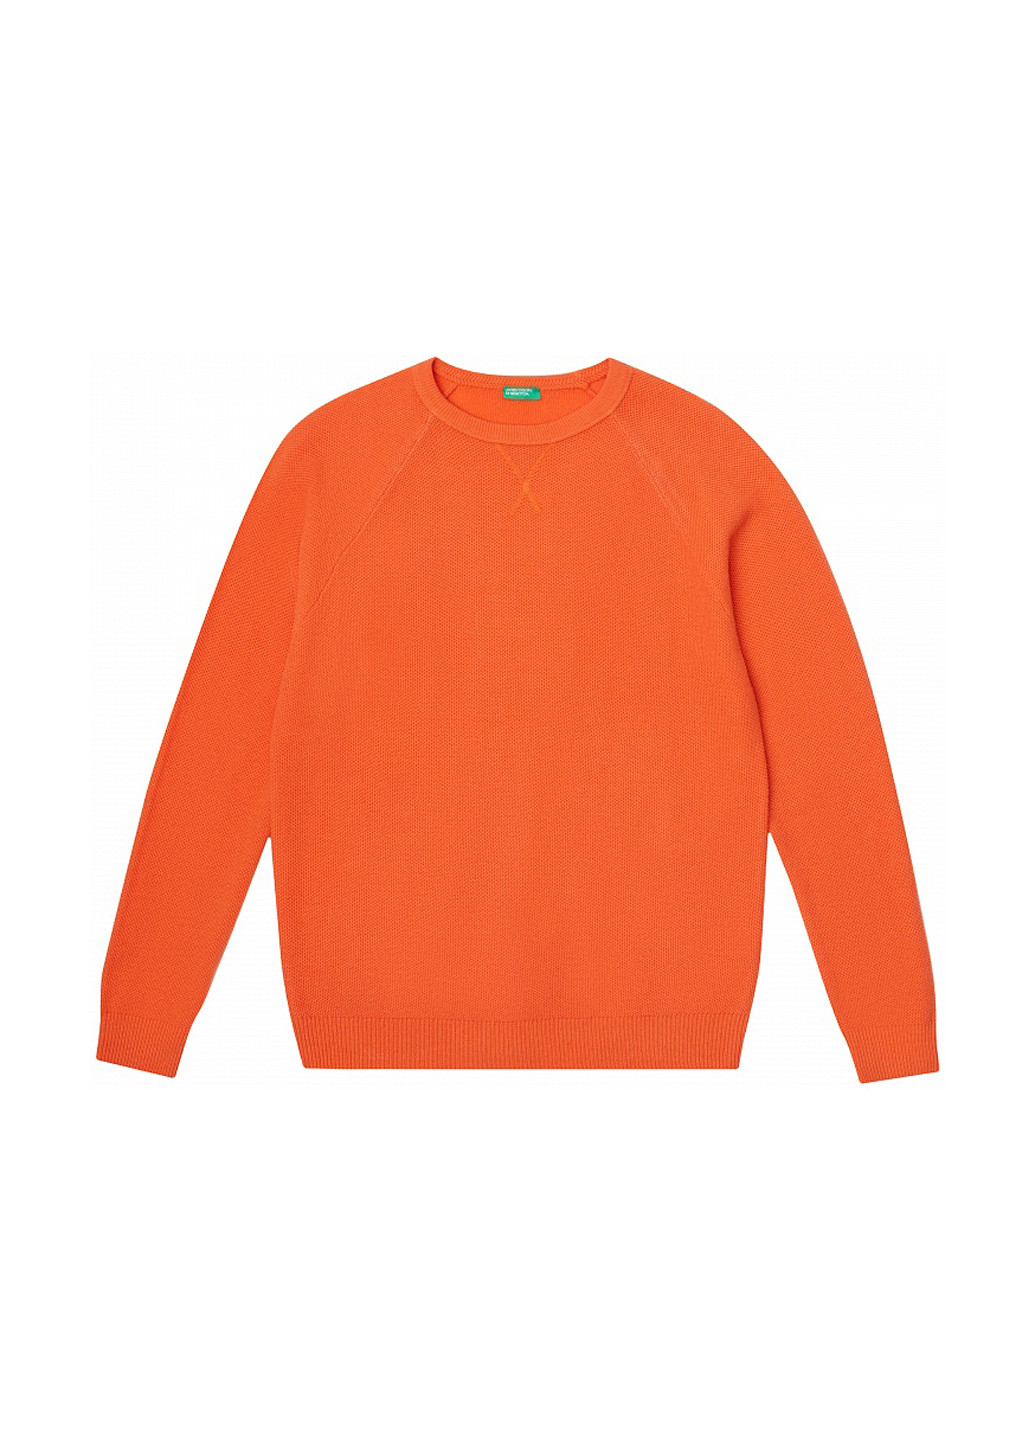 Оранжевый демисезонный джемпер джемпер United Colors of Benetton